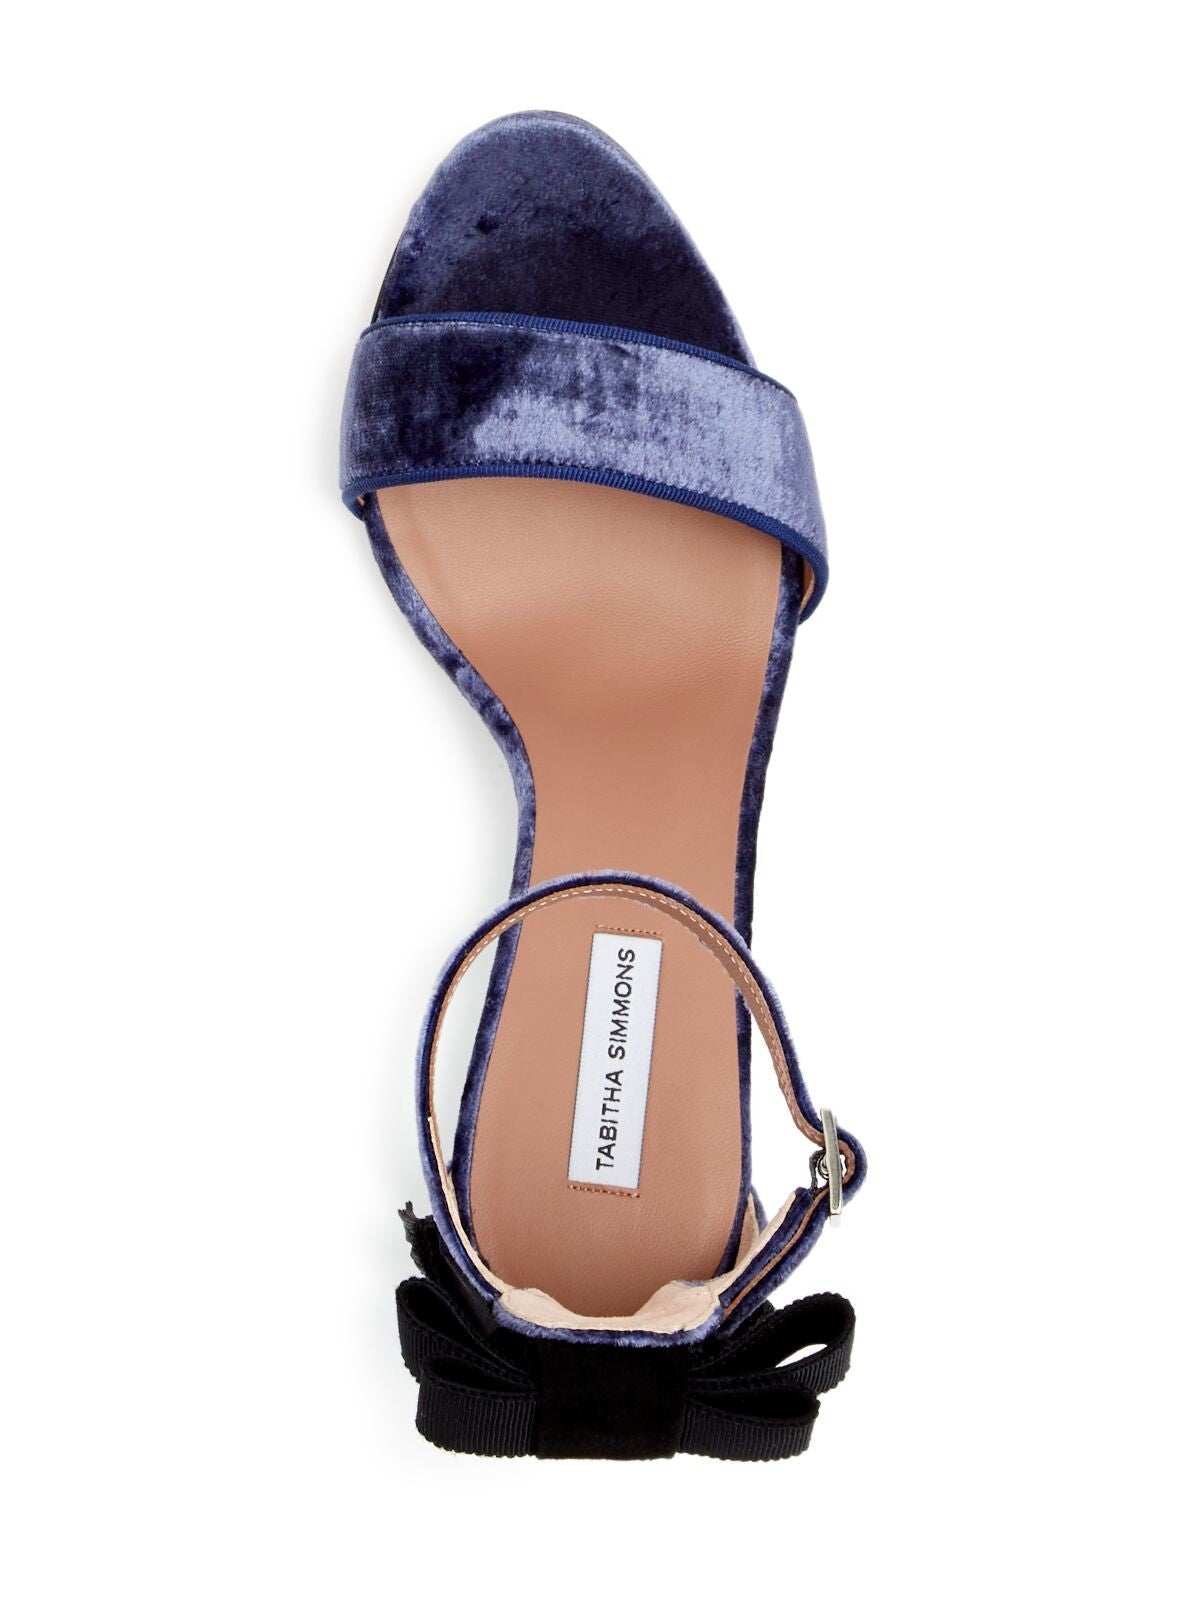 TABITHA SIMMONS Womens Navy Velvet Bow Accent Tasseled Frances Almond Toe Stiletto Buckle Dress Sandals Shoes 37.5